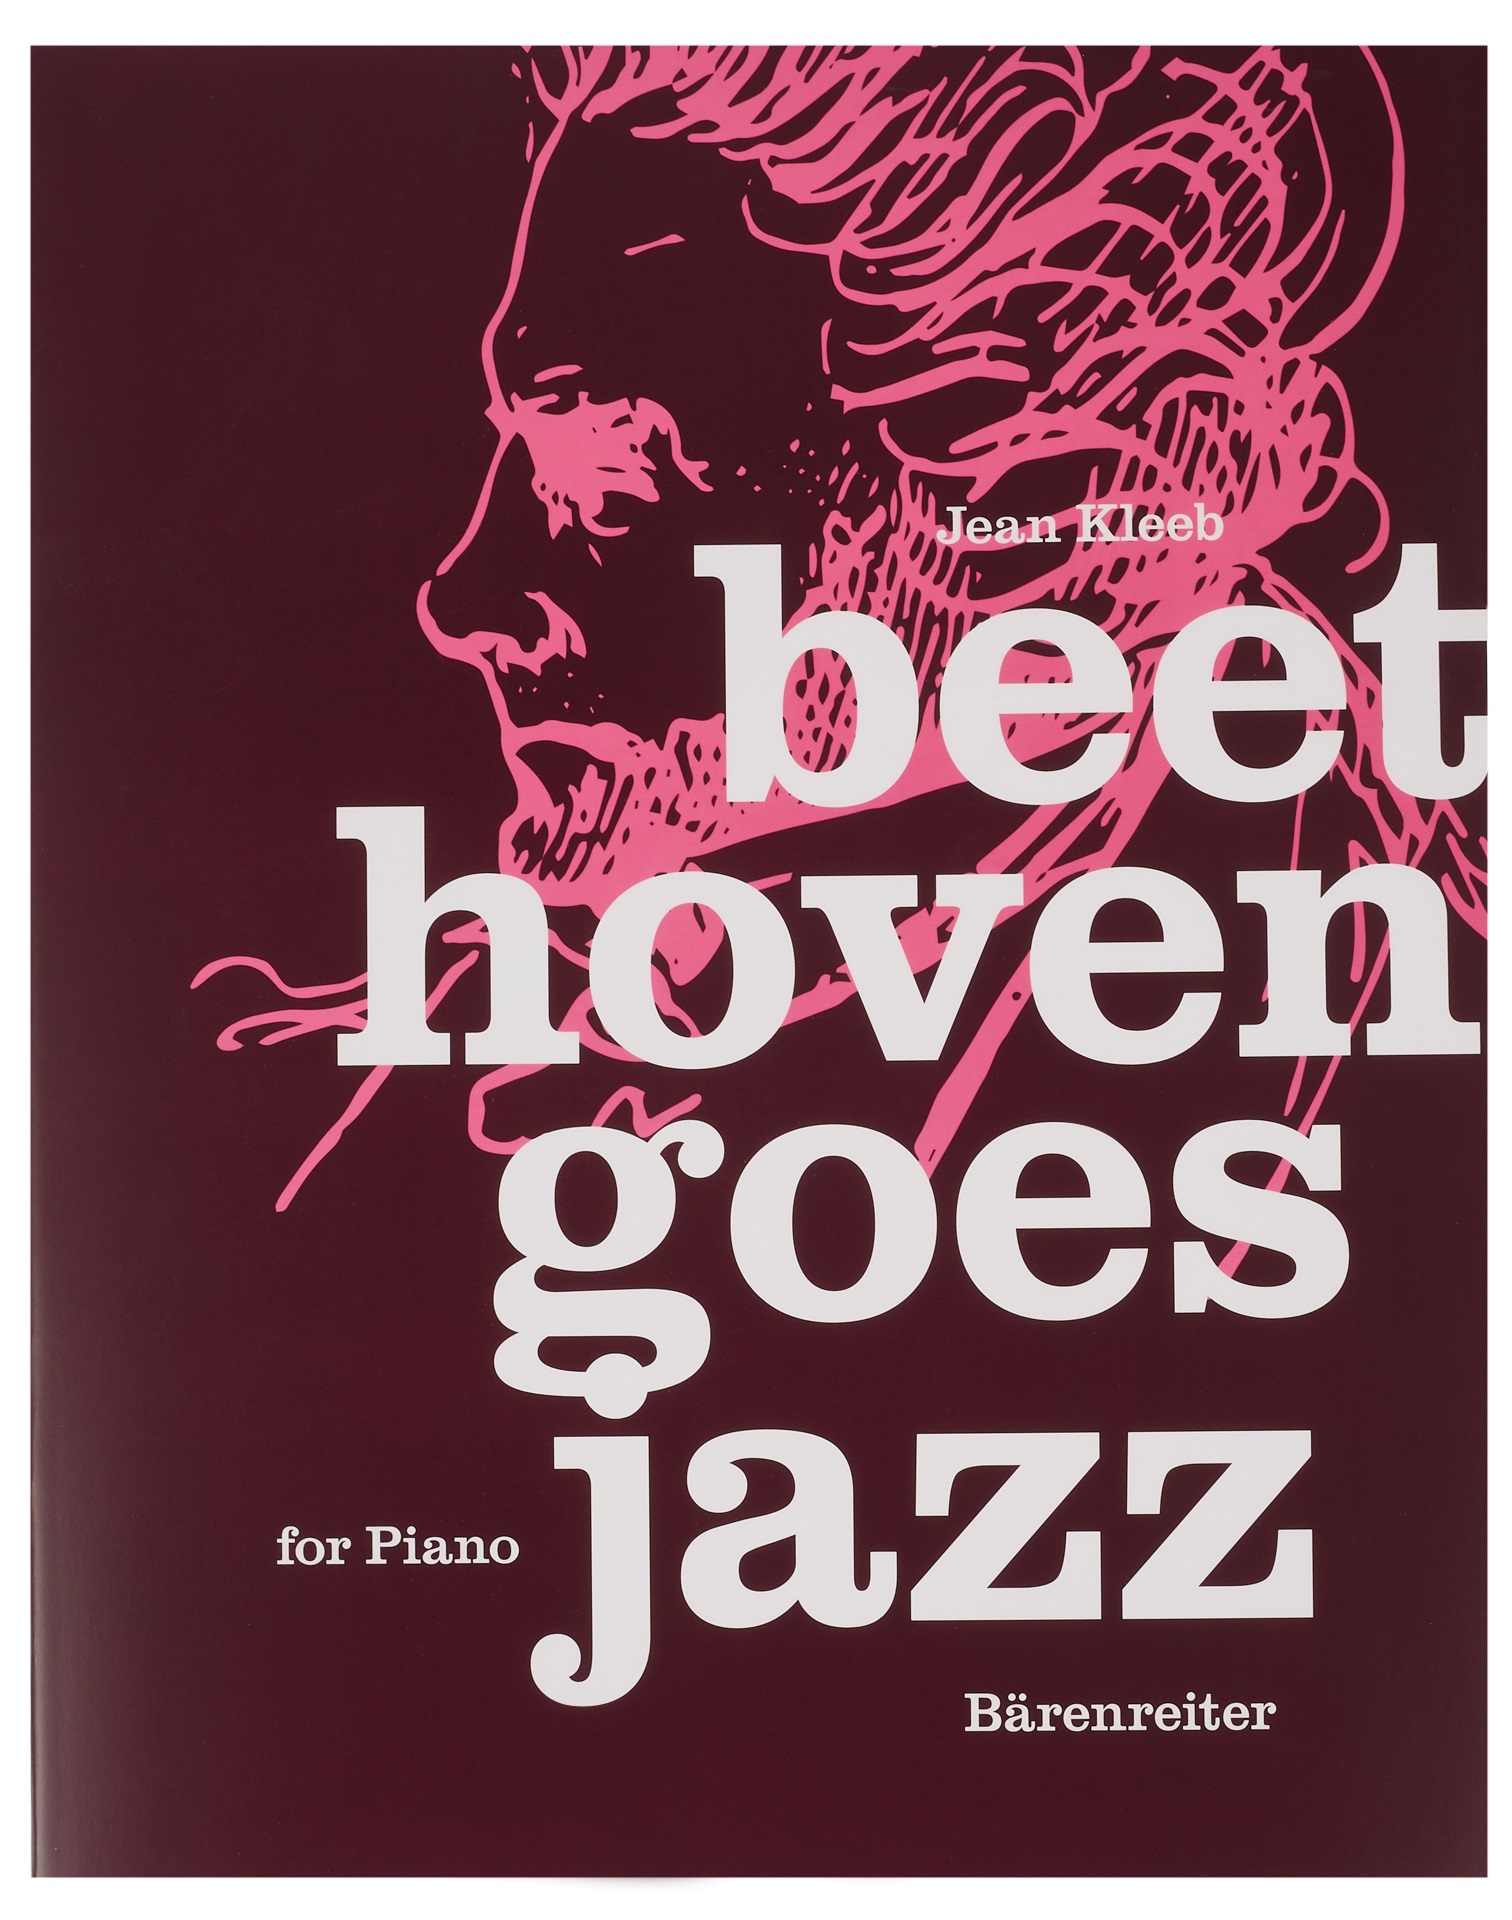 Fotografie MS Beethoven Goes Jazz - Jean Kleeb